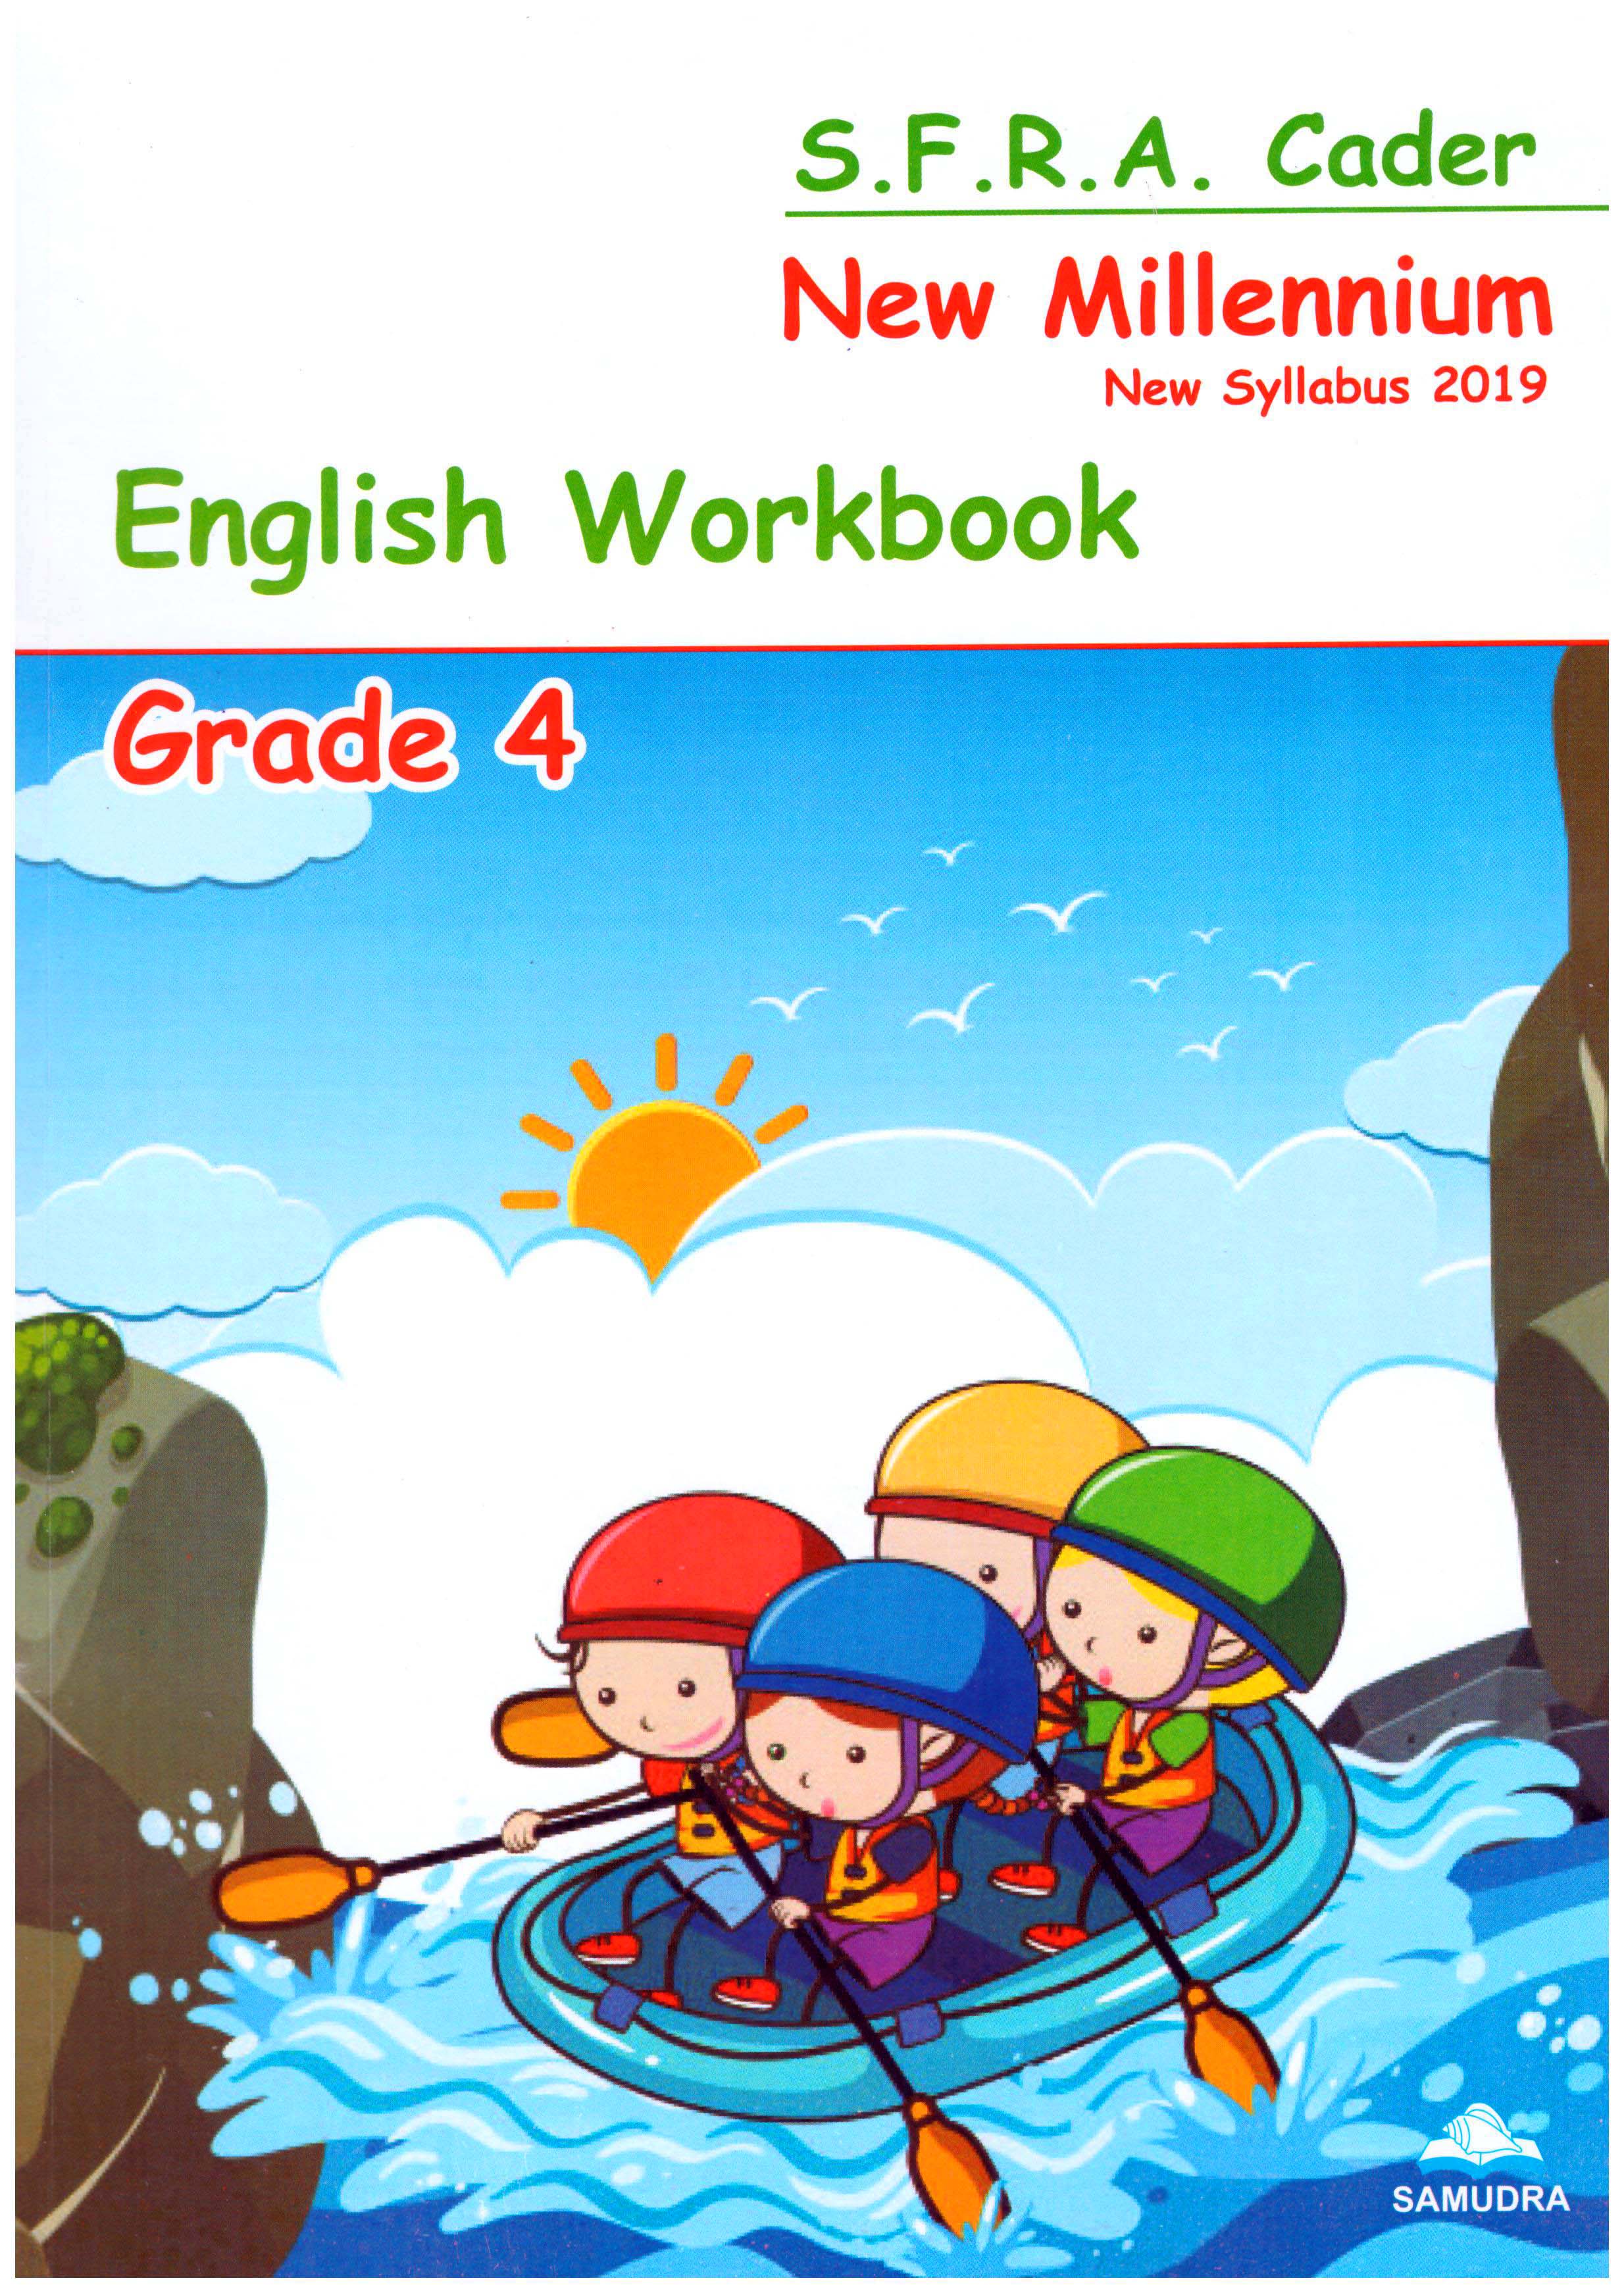 New Millennium English Workbook Grade 4 ( New Syllabus 2019 )